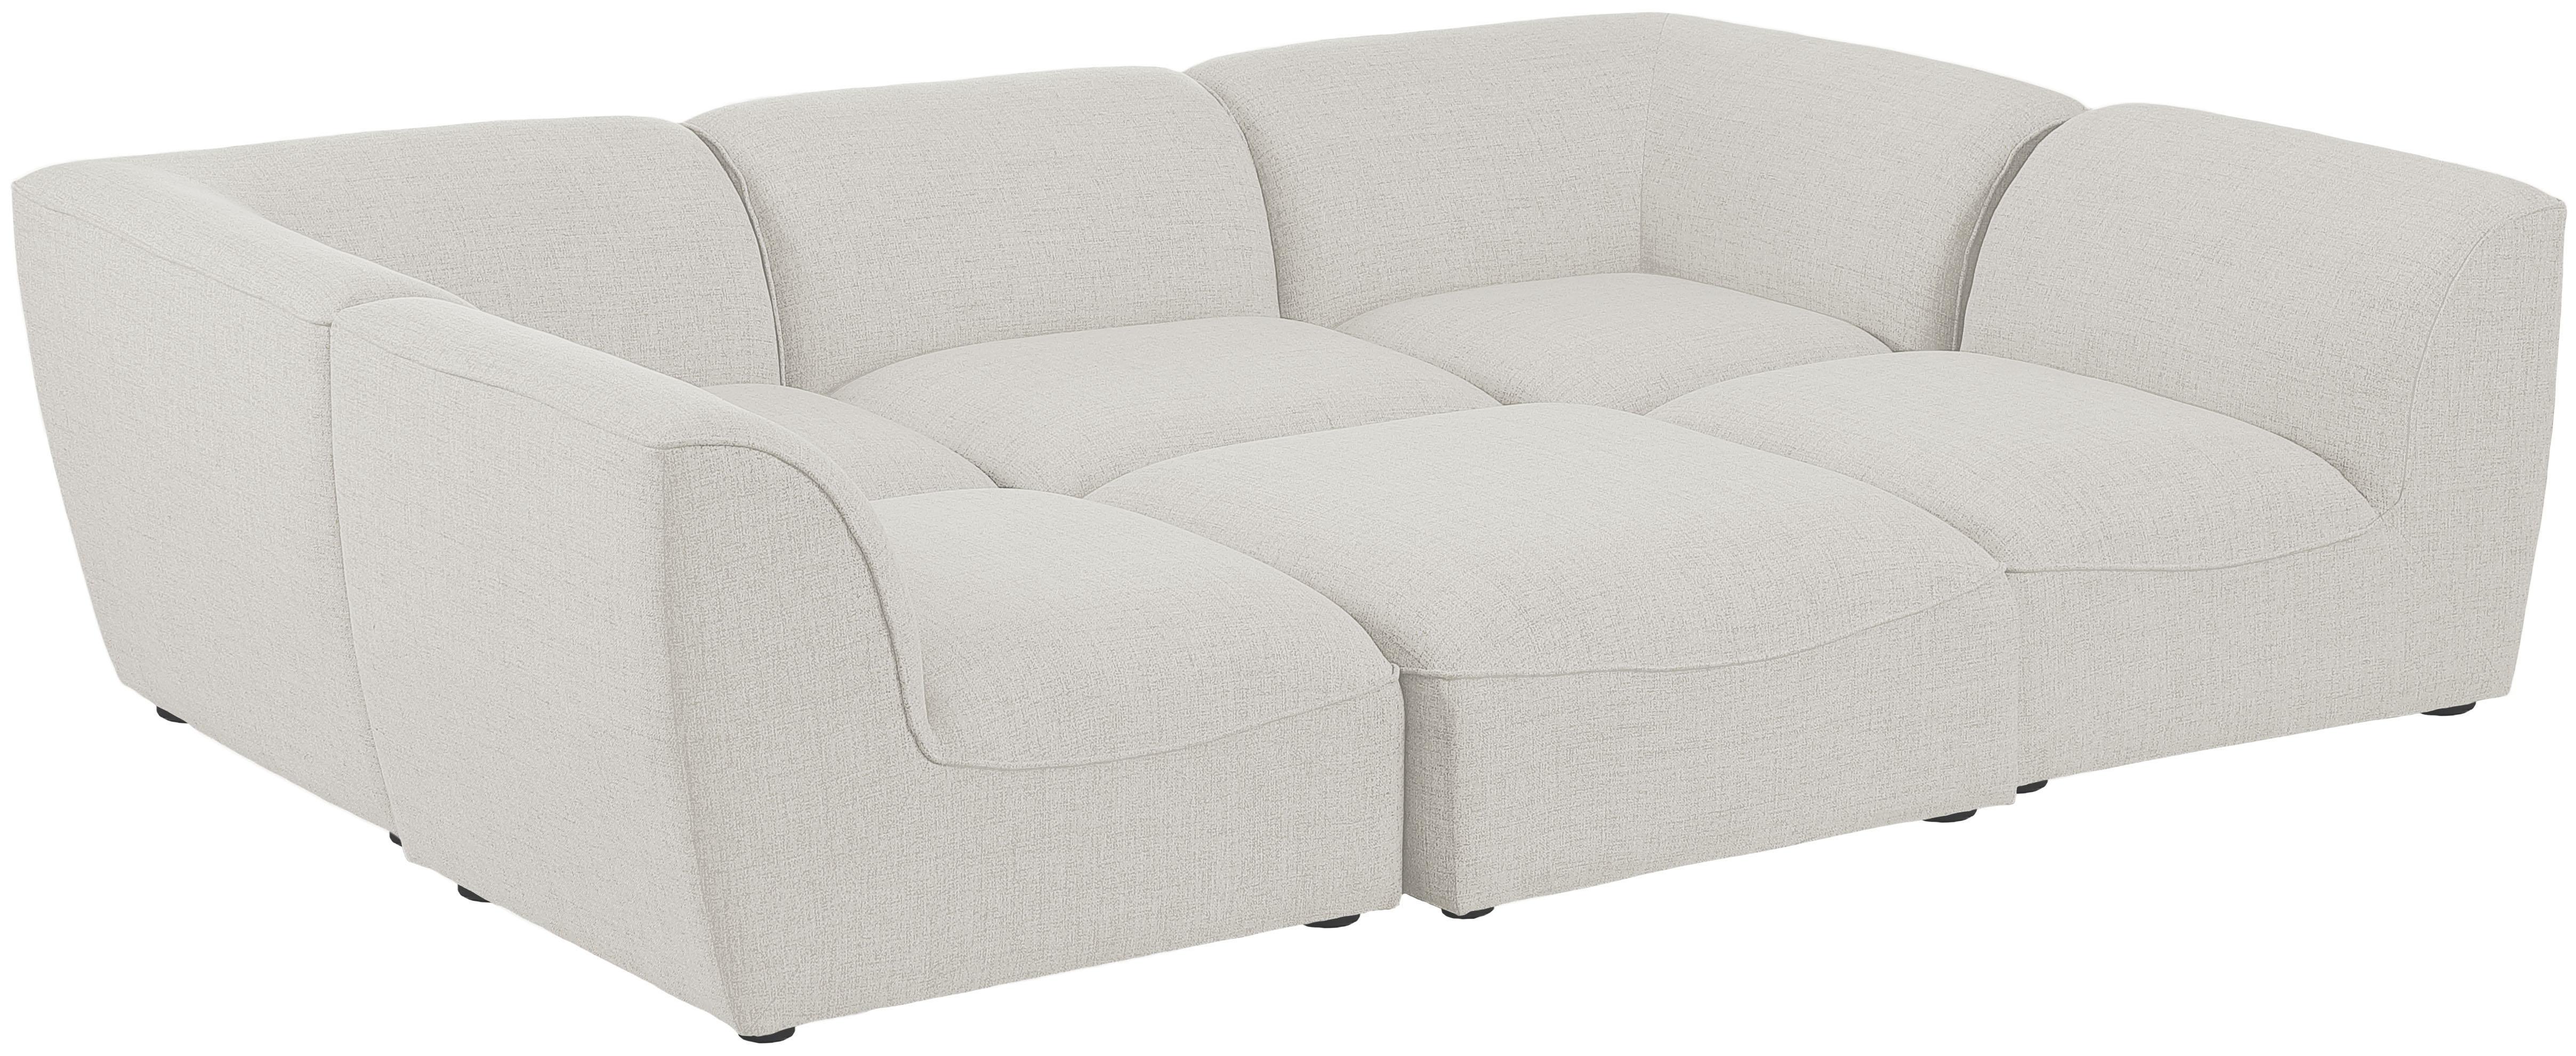 Meridian Furniture - Miramar - Modular Sectional 6 Piece - Cream - Fabric - Modern & Contemporary - 5th Avenue Furniture